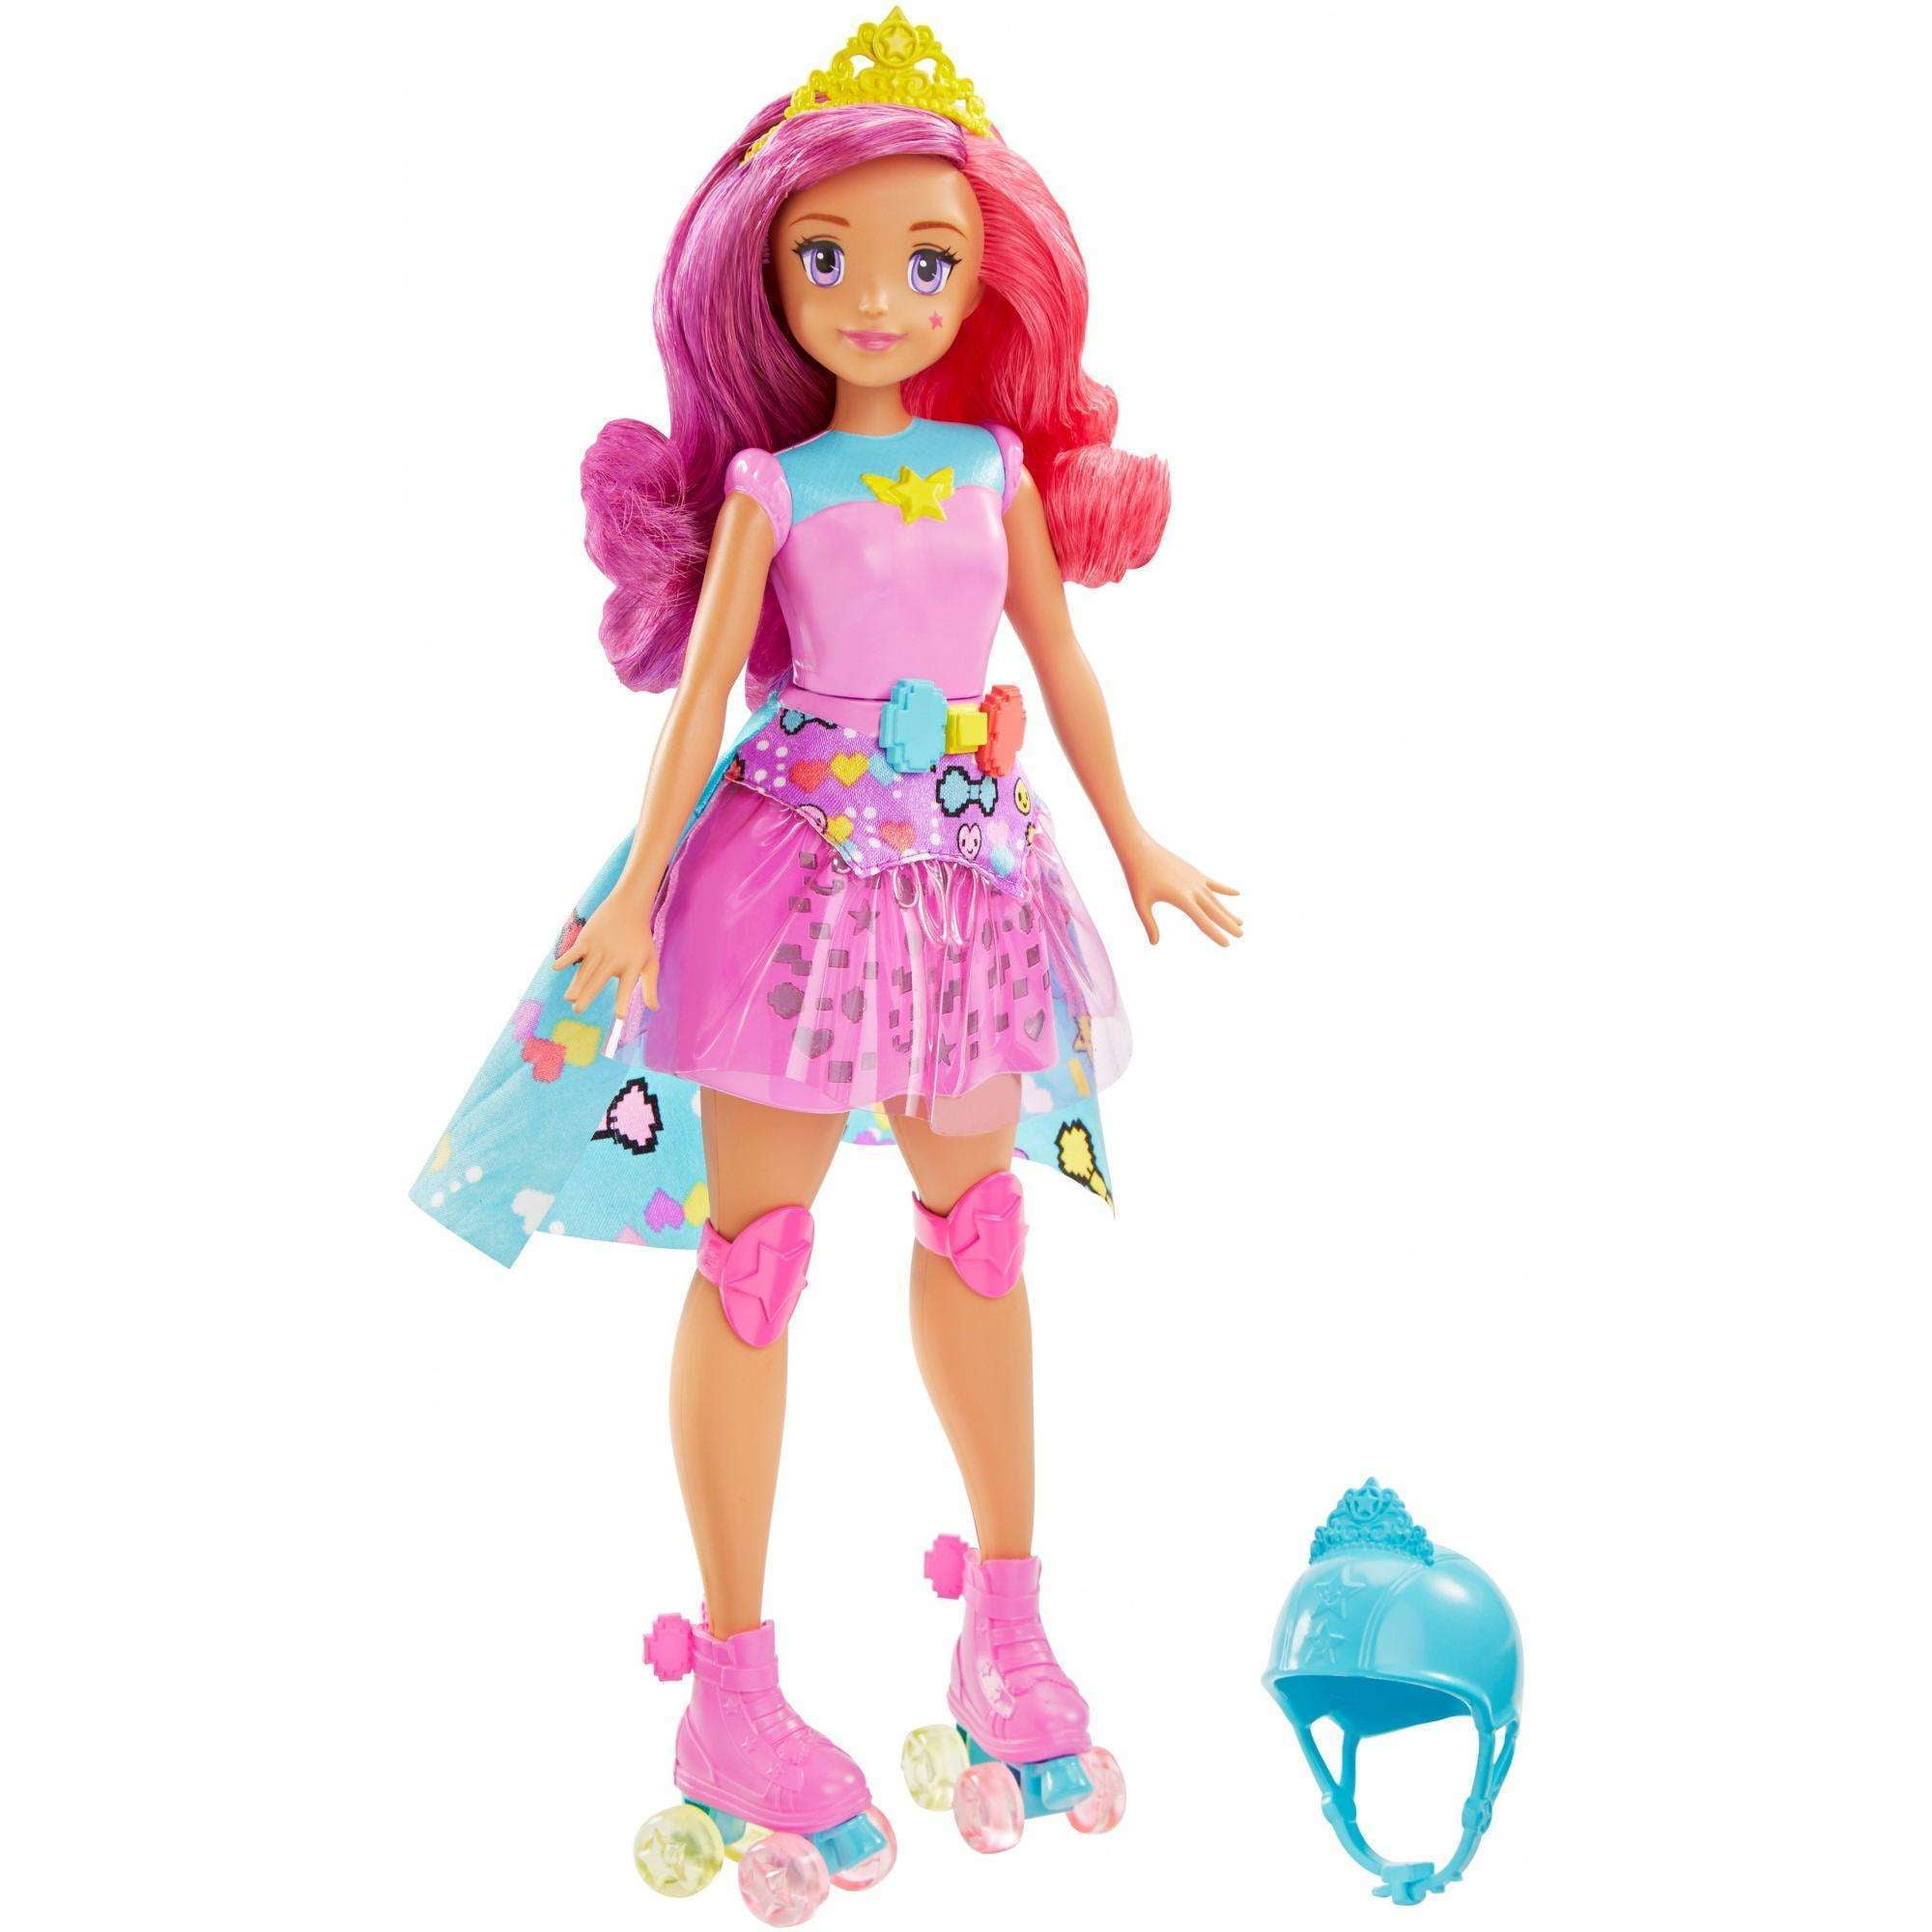 Barbie Video Game Hero Multi-Color Hair Doll - Walmart.com